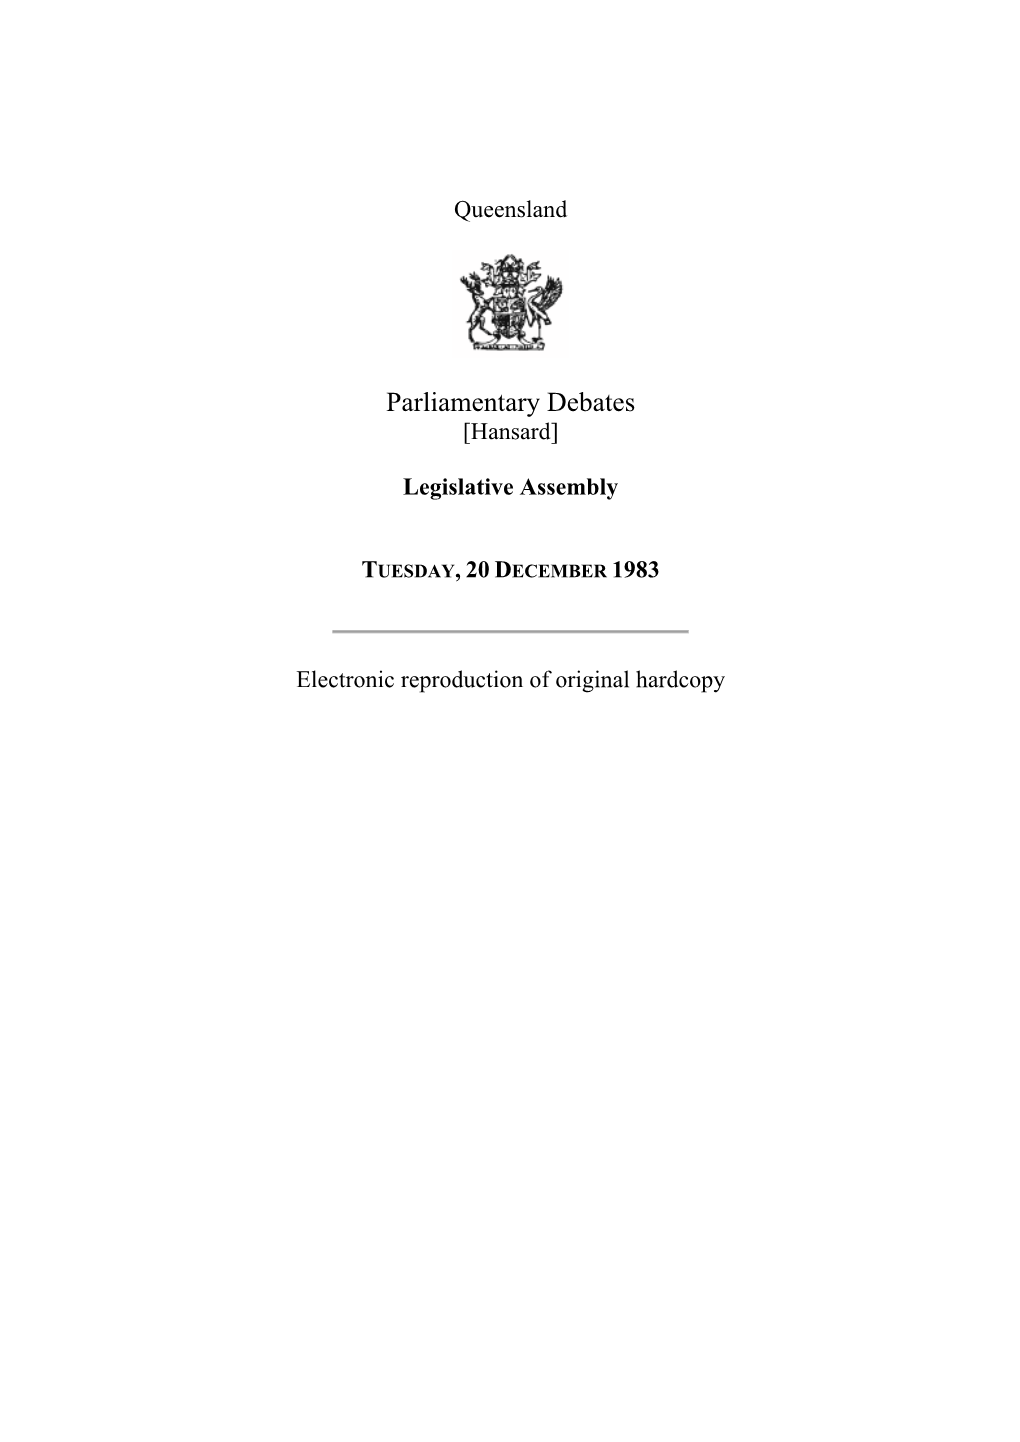 [Hansard] Legislative Assembly TUESDAY, 20 DECEMBER 1983 Electronic Reproduction of Original Hardcopy